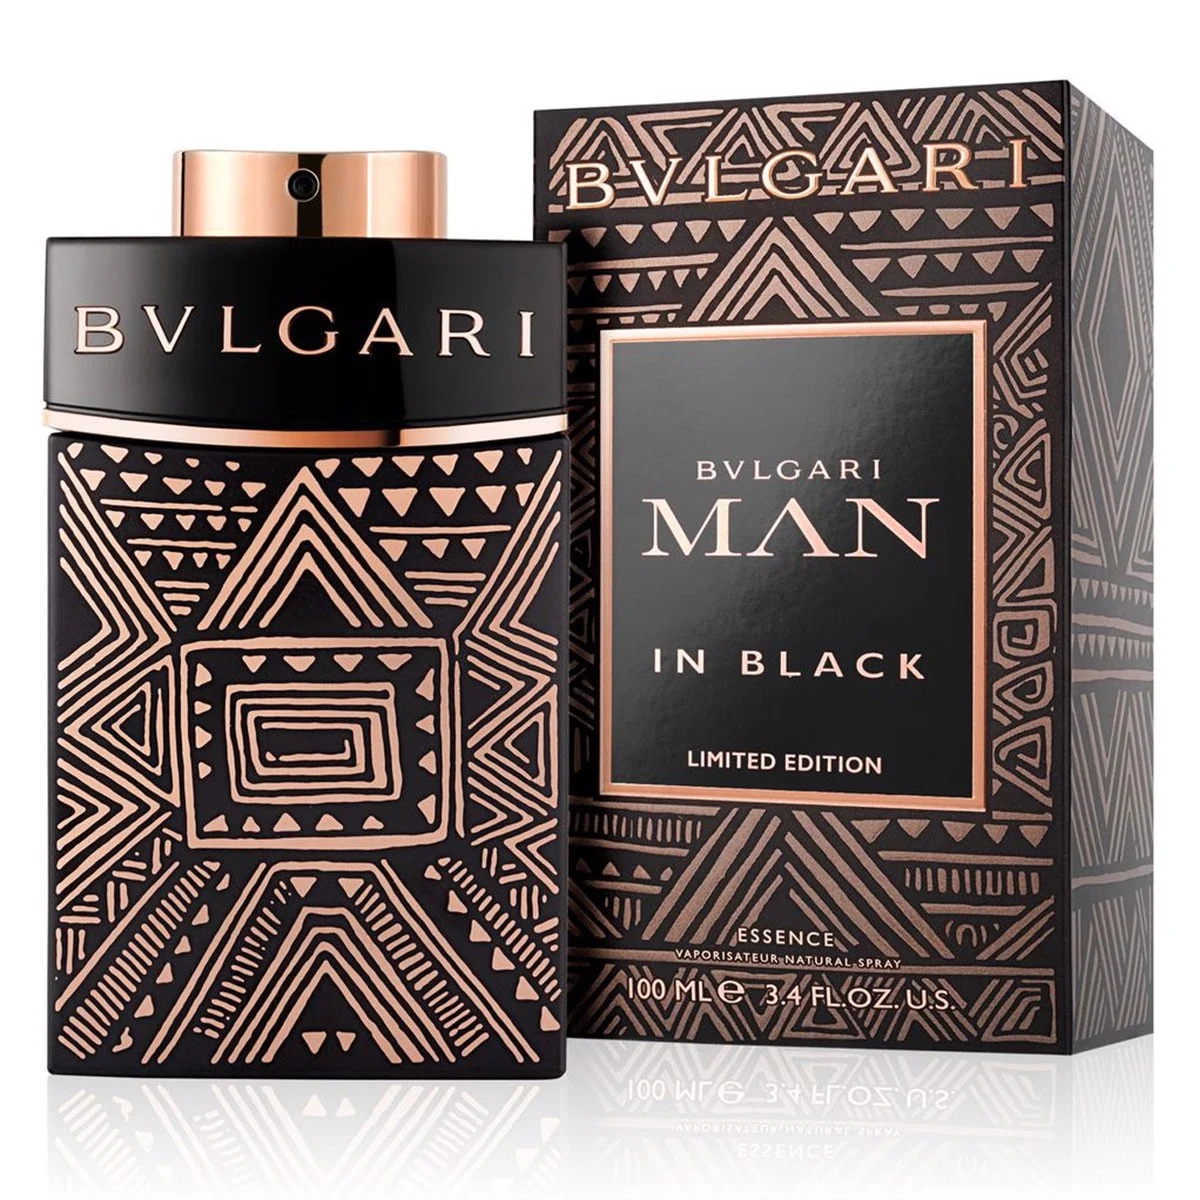 Bvlgari Man In Black Essence Limited Edition 100ml